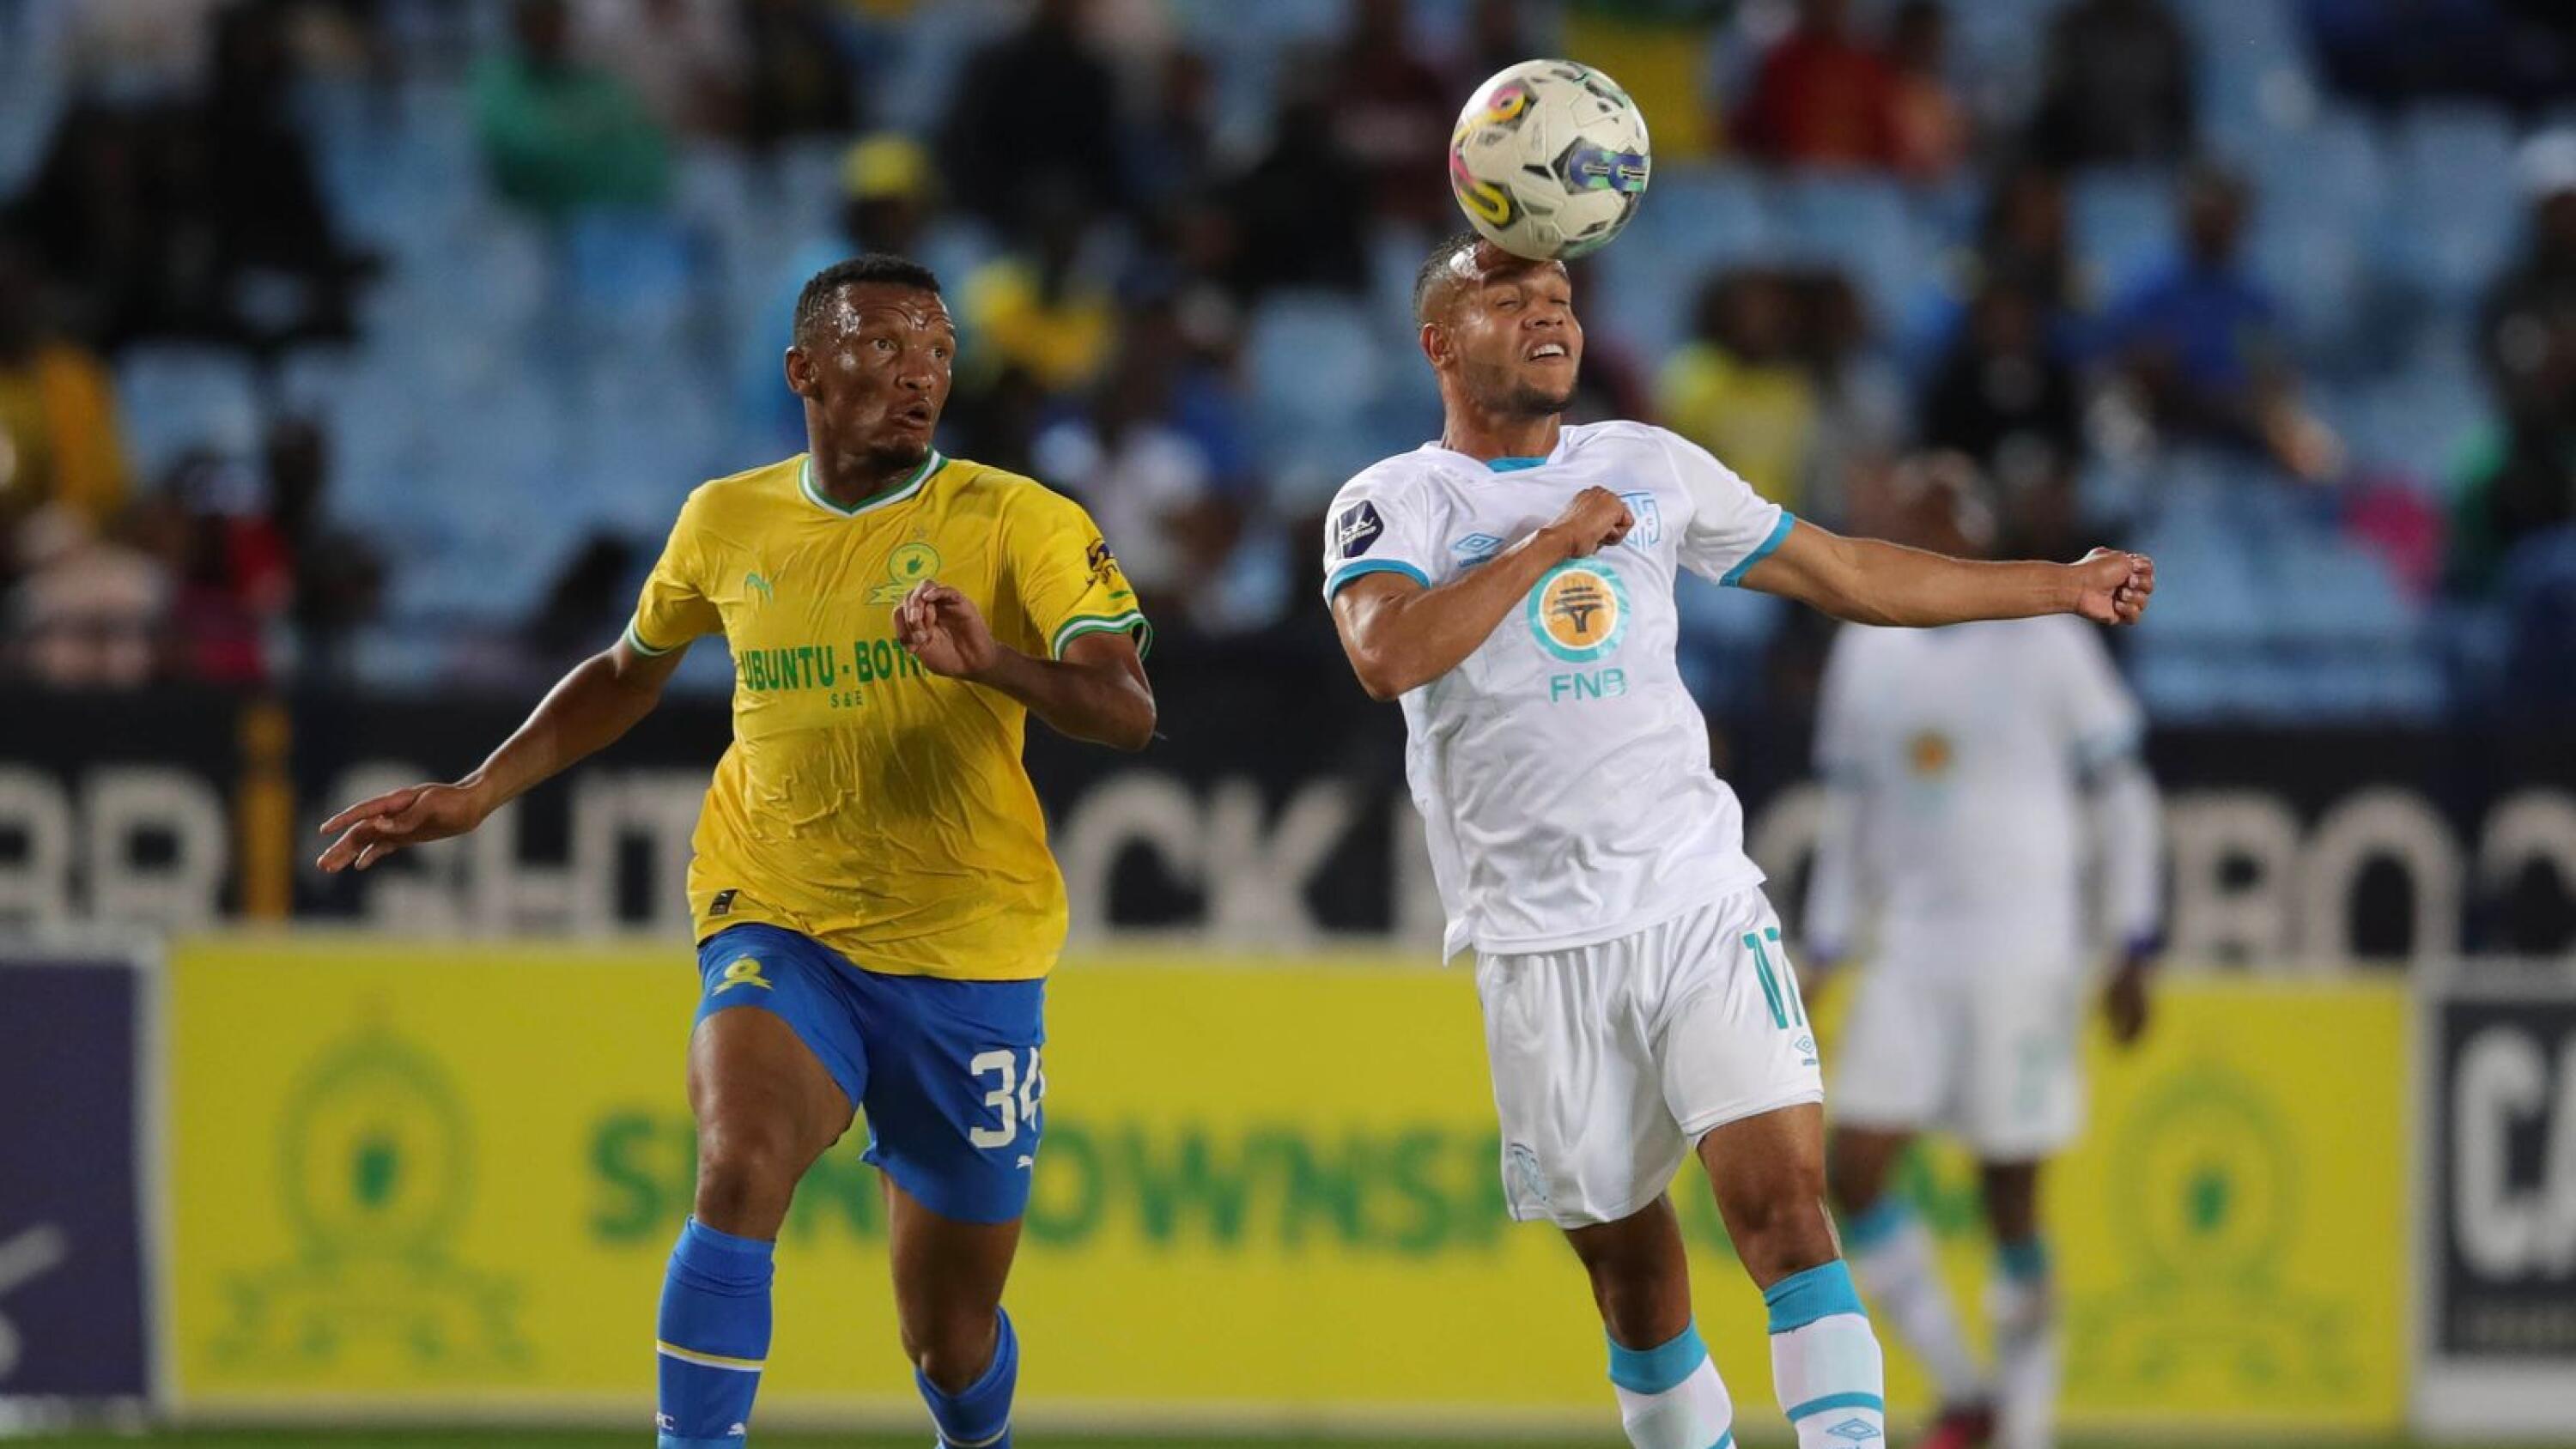 Juan Zapata Londono of Cape Town is challenged by Mothobi Mvala of Mamelodi Sundowns during their DStv Premiership match at Loftus Versfeld in Tshwane on Tuesday